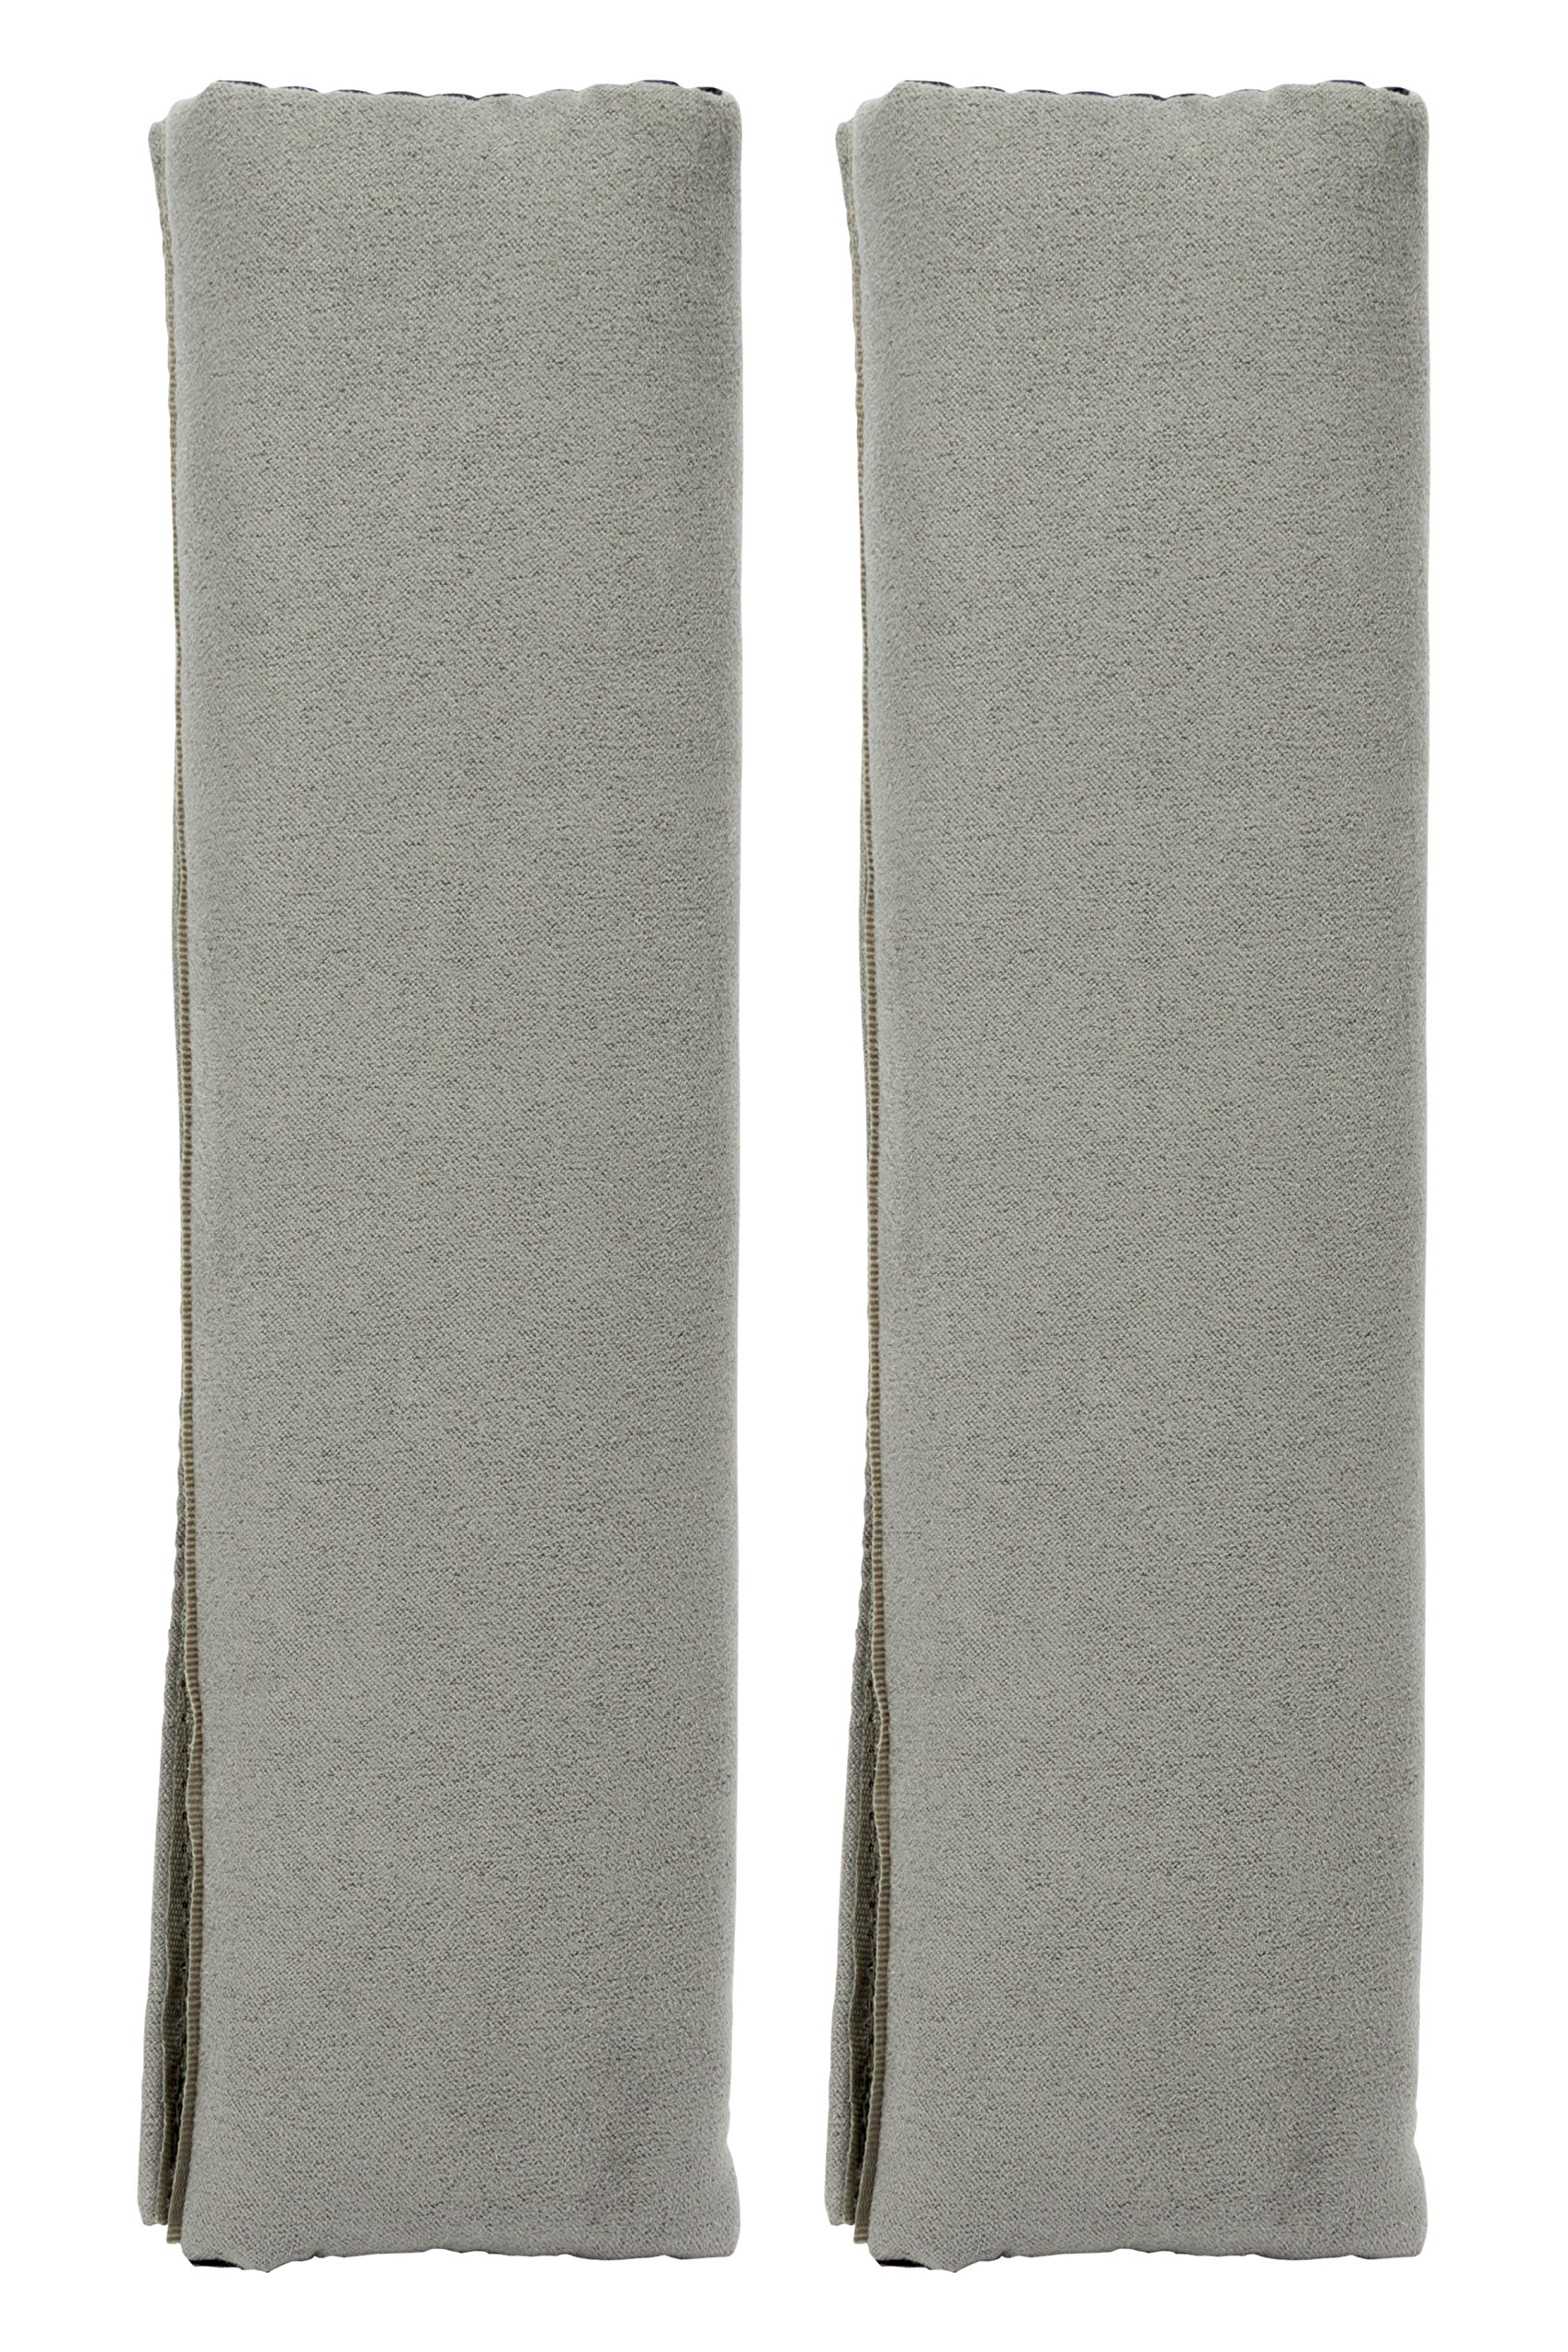 Gürtelpolster, Grau, 2er Set von BC CORONA